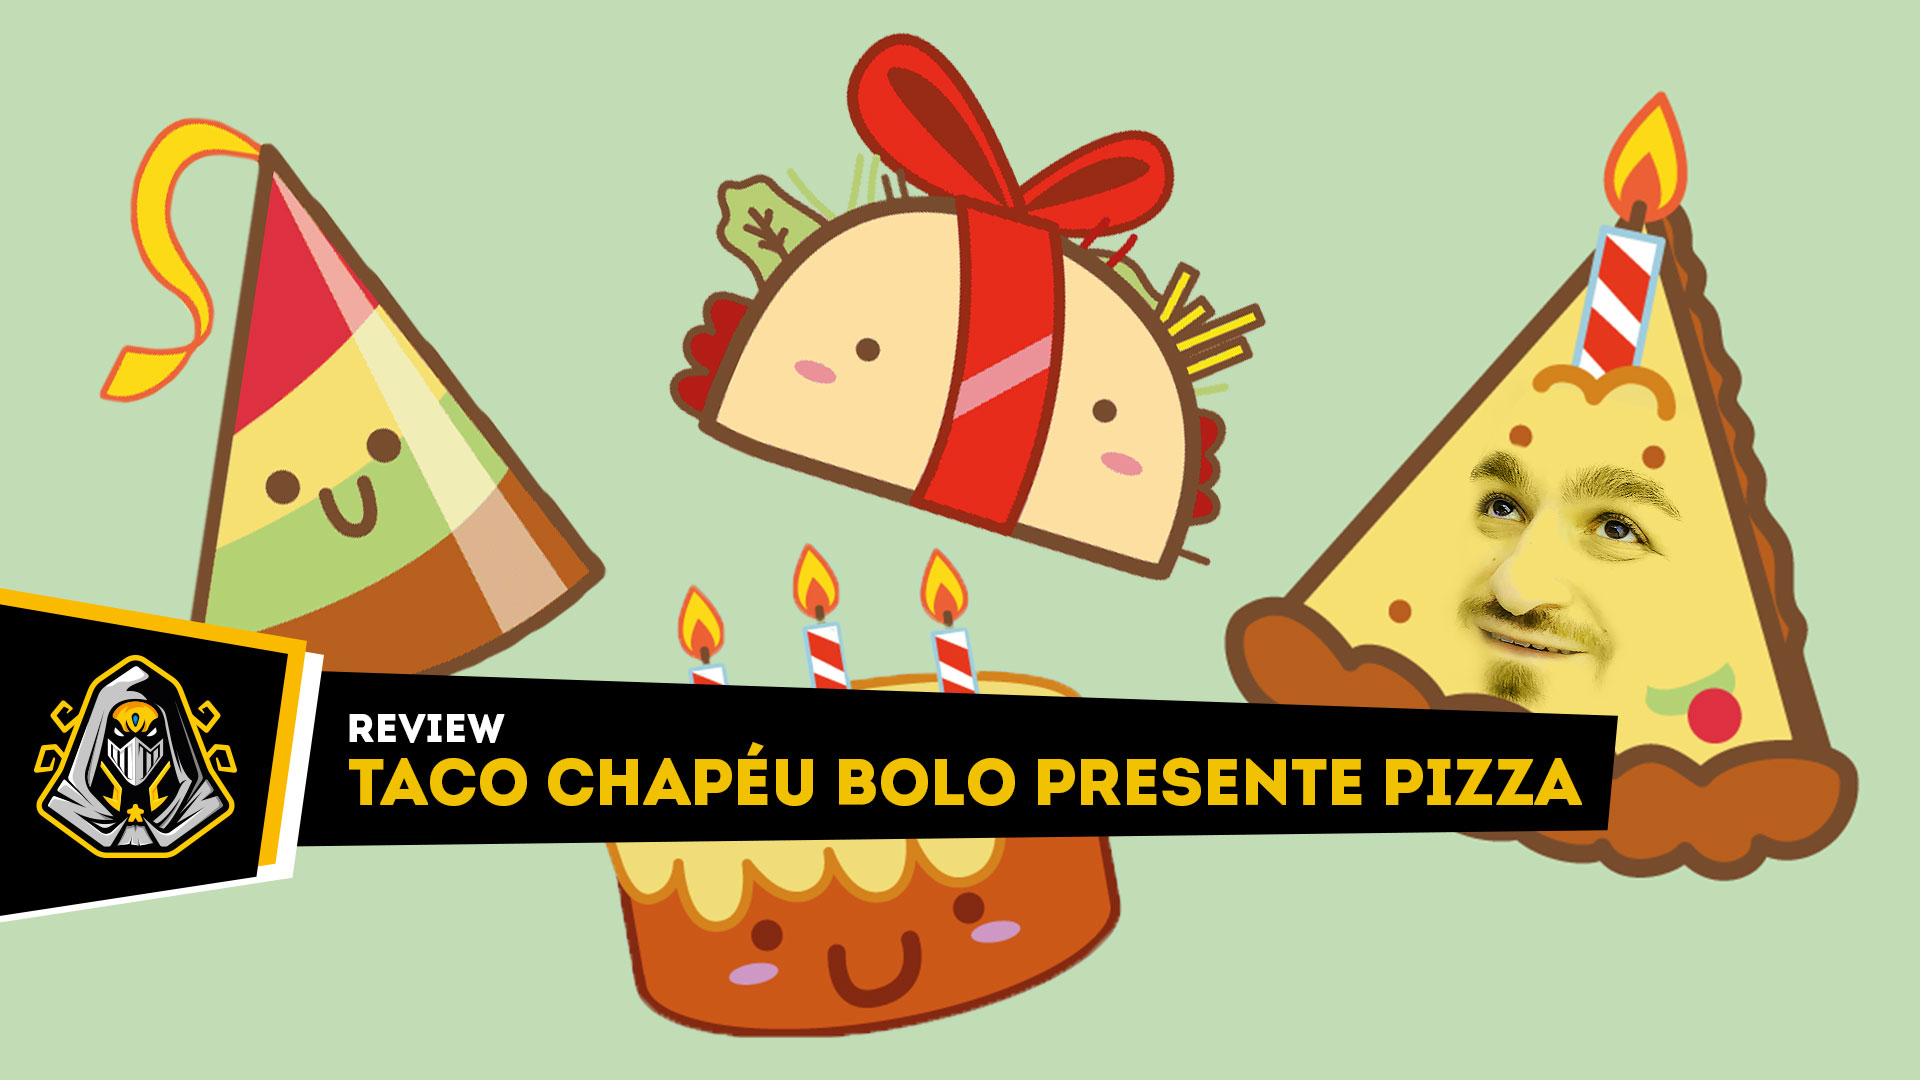 Jogo Taco Chapéu Bolo Presente Pizza